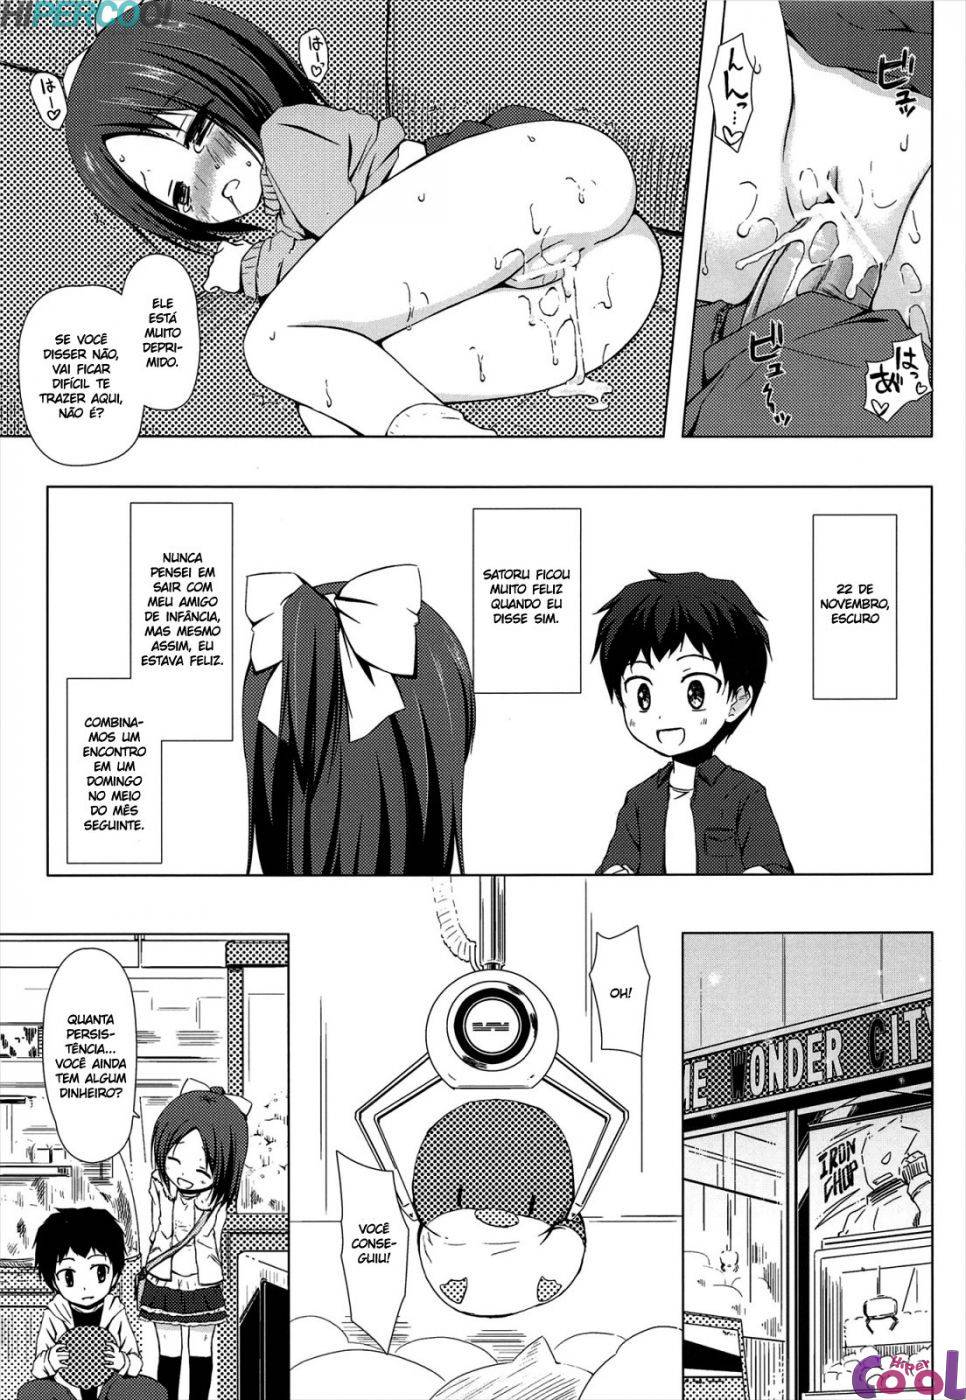 owari-no-nikkichou-chapter-01-page-17.jpg